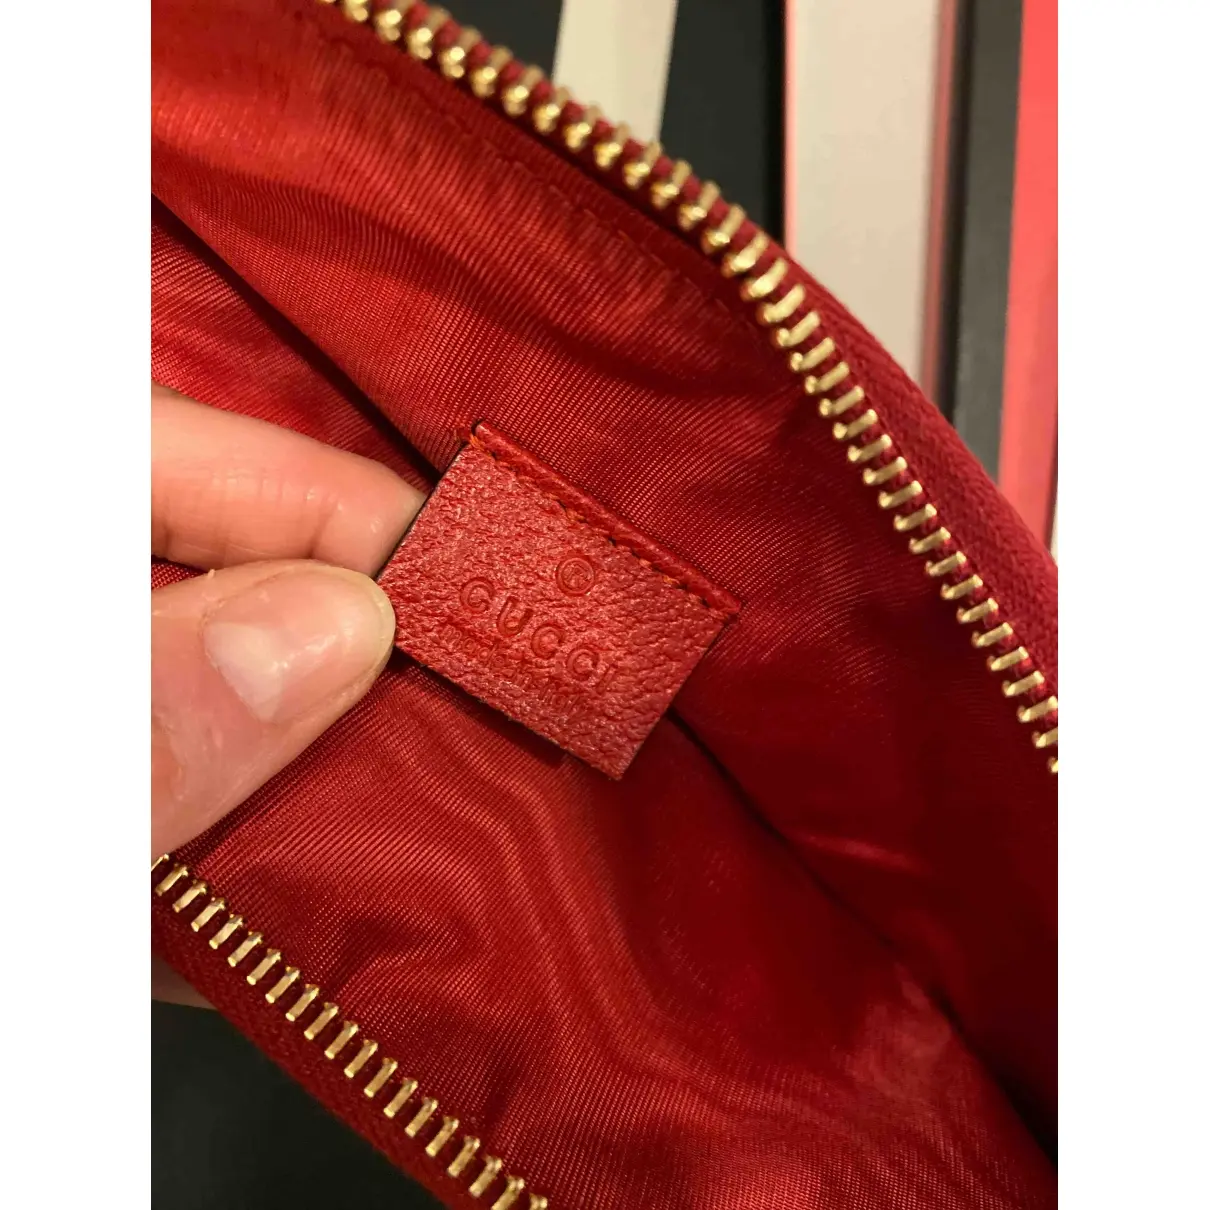 Buy Gucci Sylvie cloth clutch bag online